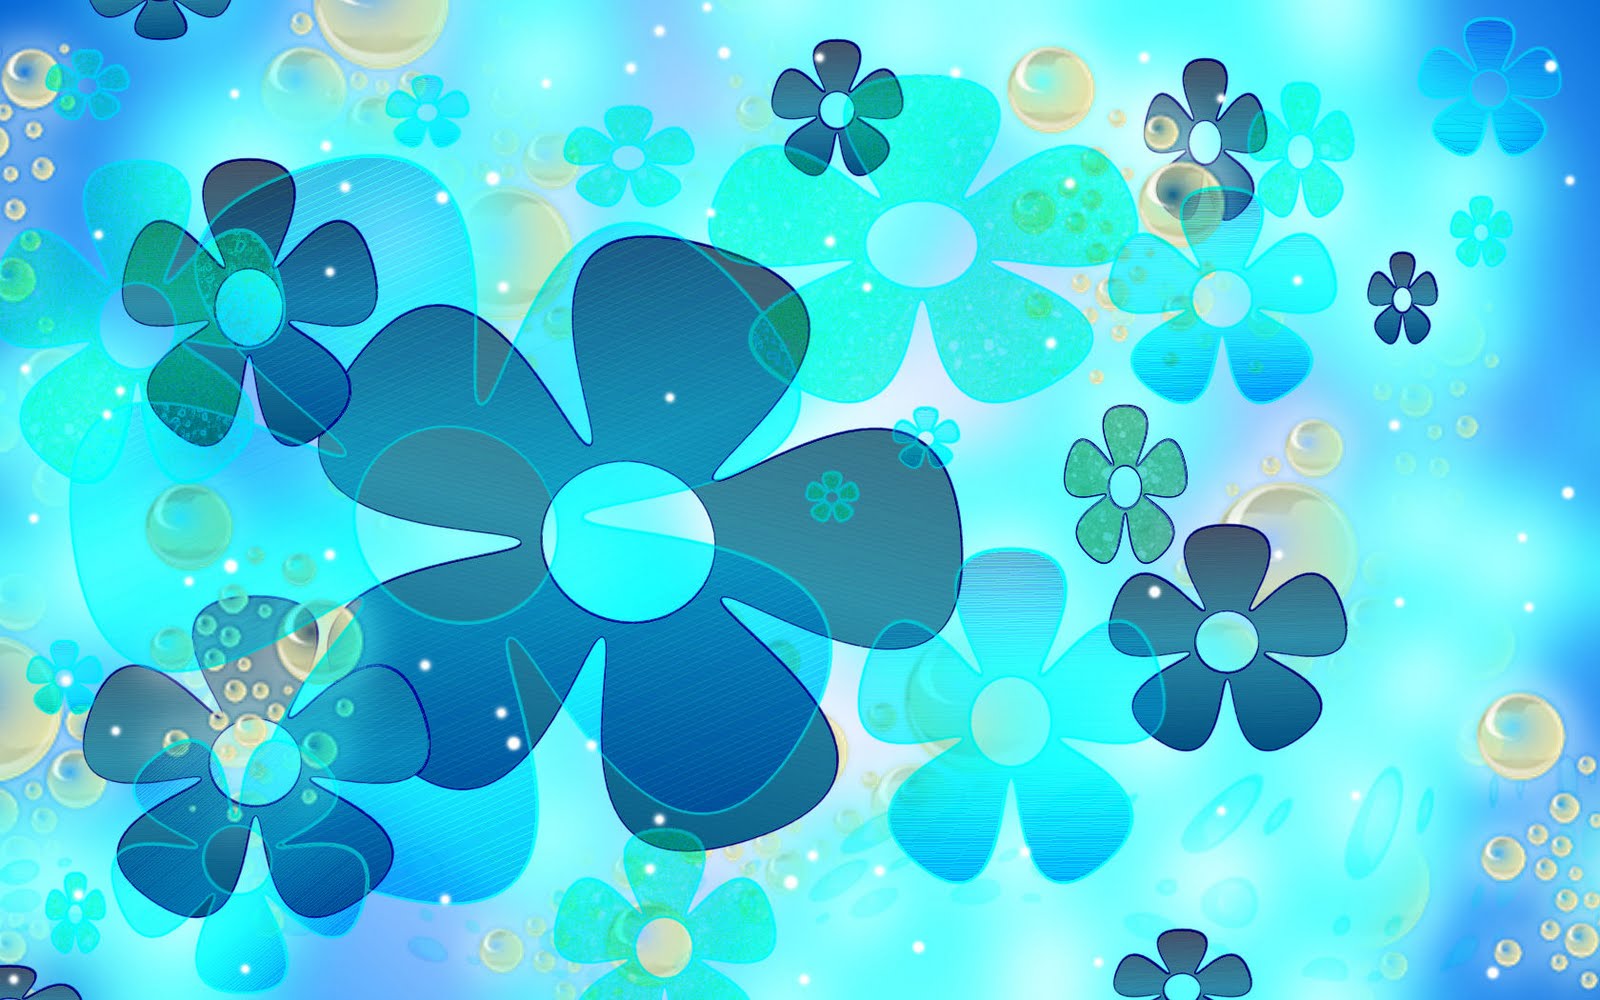 Blue and Green Floral Desktop Wallpaper Free Blue and Green Floral Desktop Background